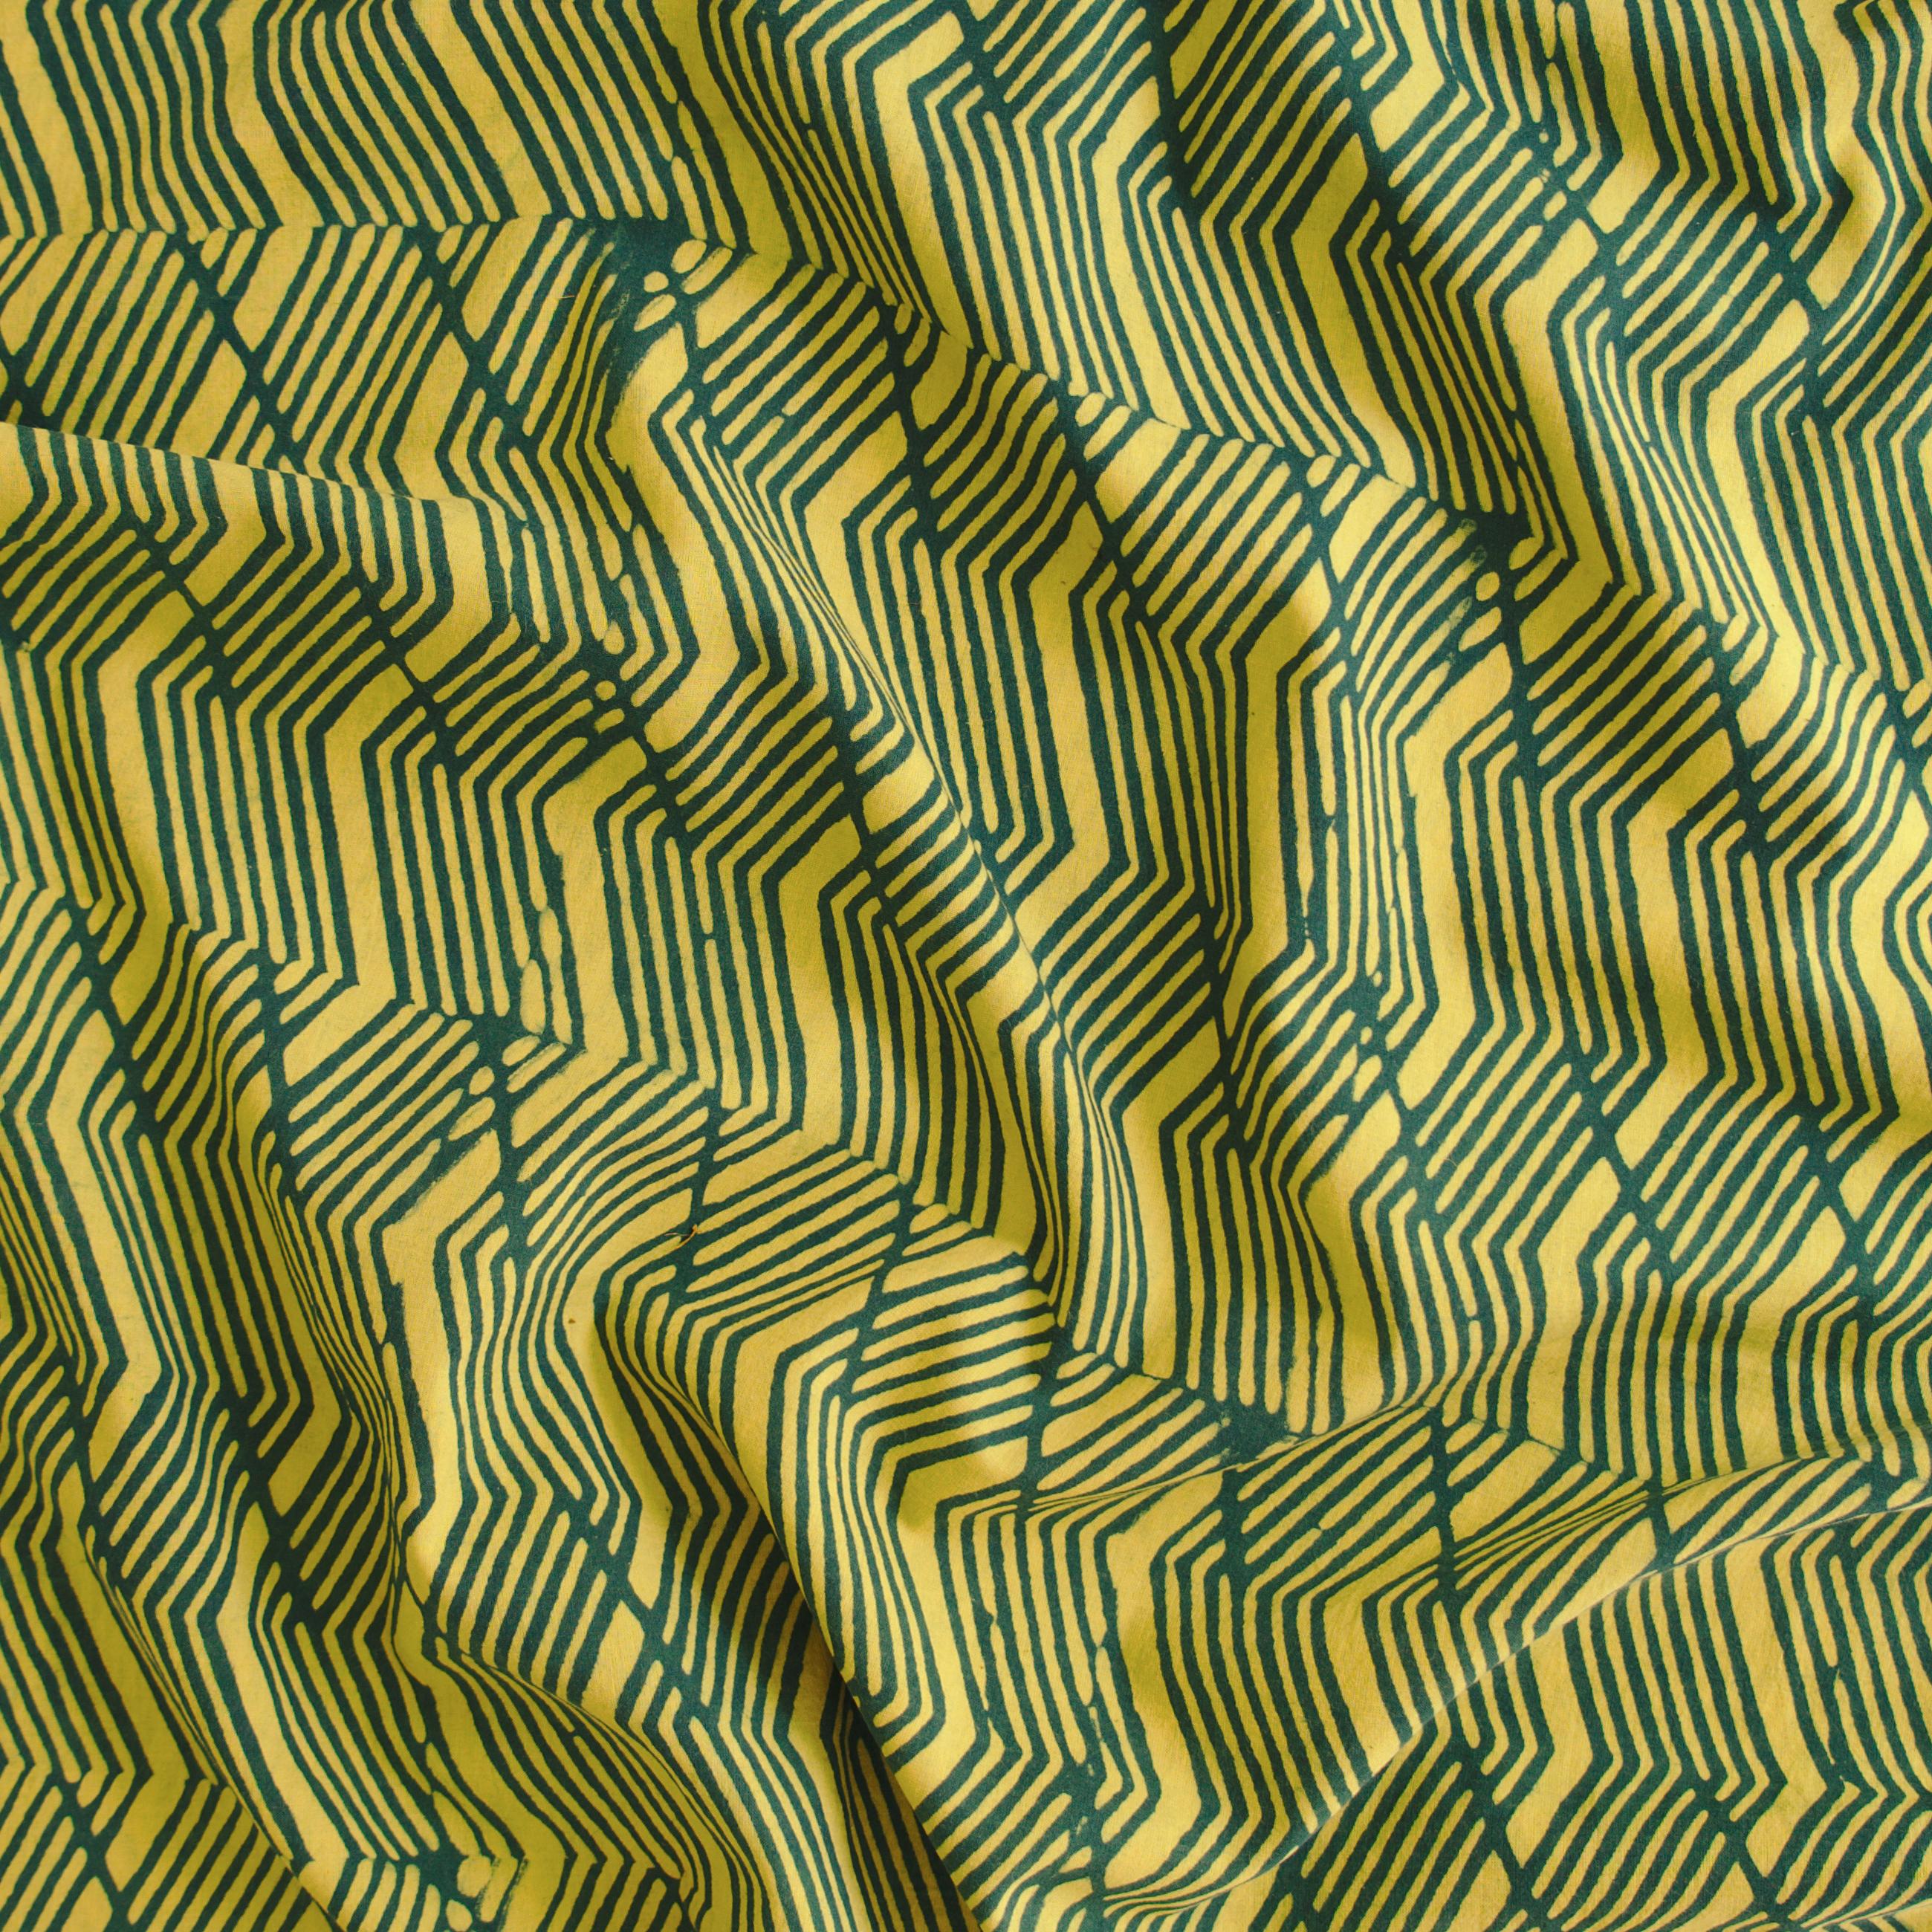 2 - SIK52 - Hand Block-Printed Cotton - Wabisabi Wave Design - Yellow & Green Dye - Contrast